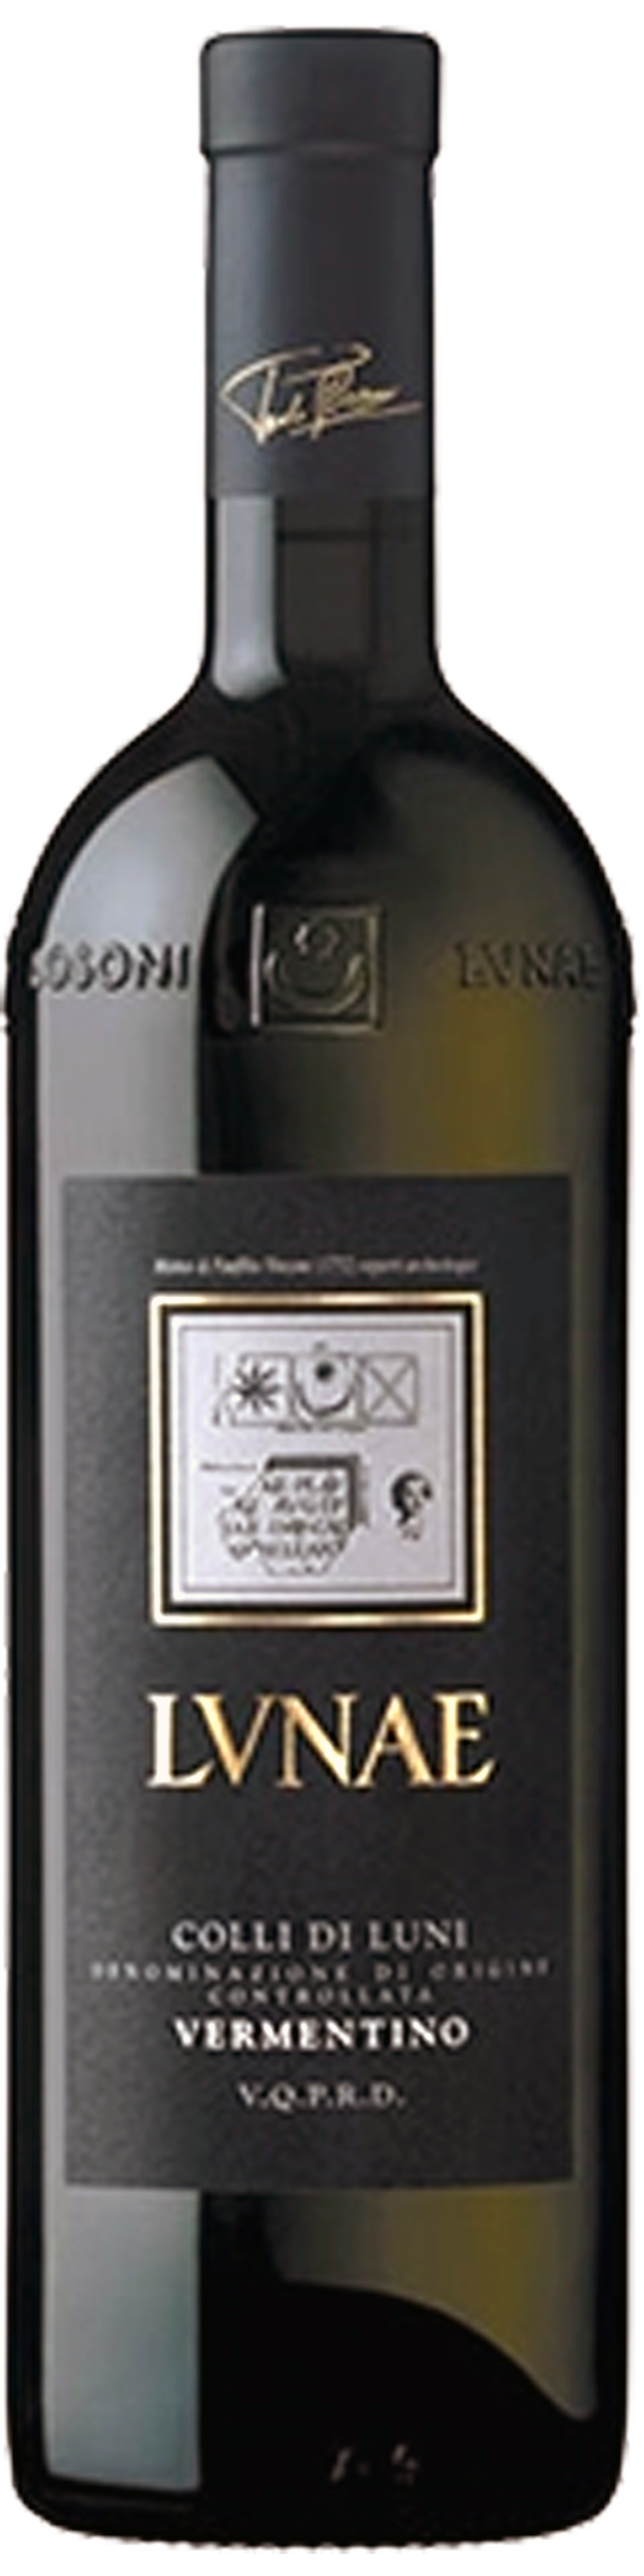 Bottle shot of 2012 Vermentino Colli di Luni Etichetta Nera